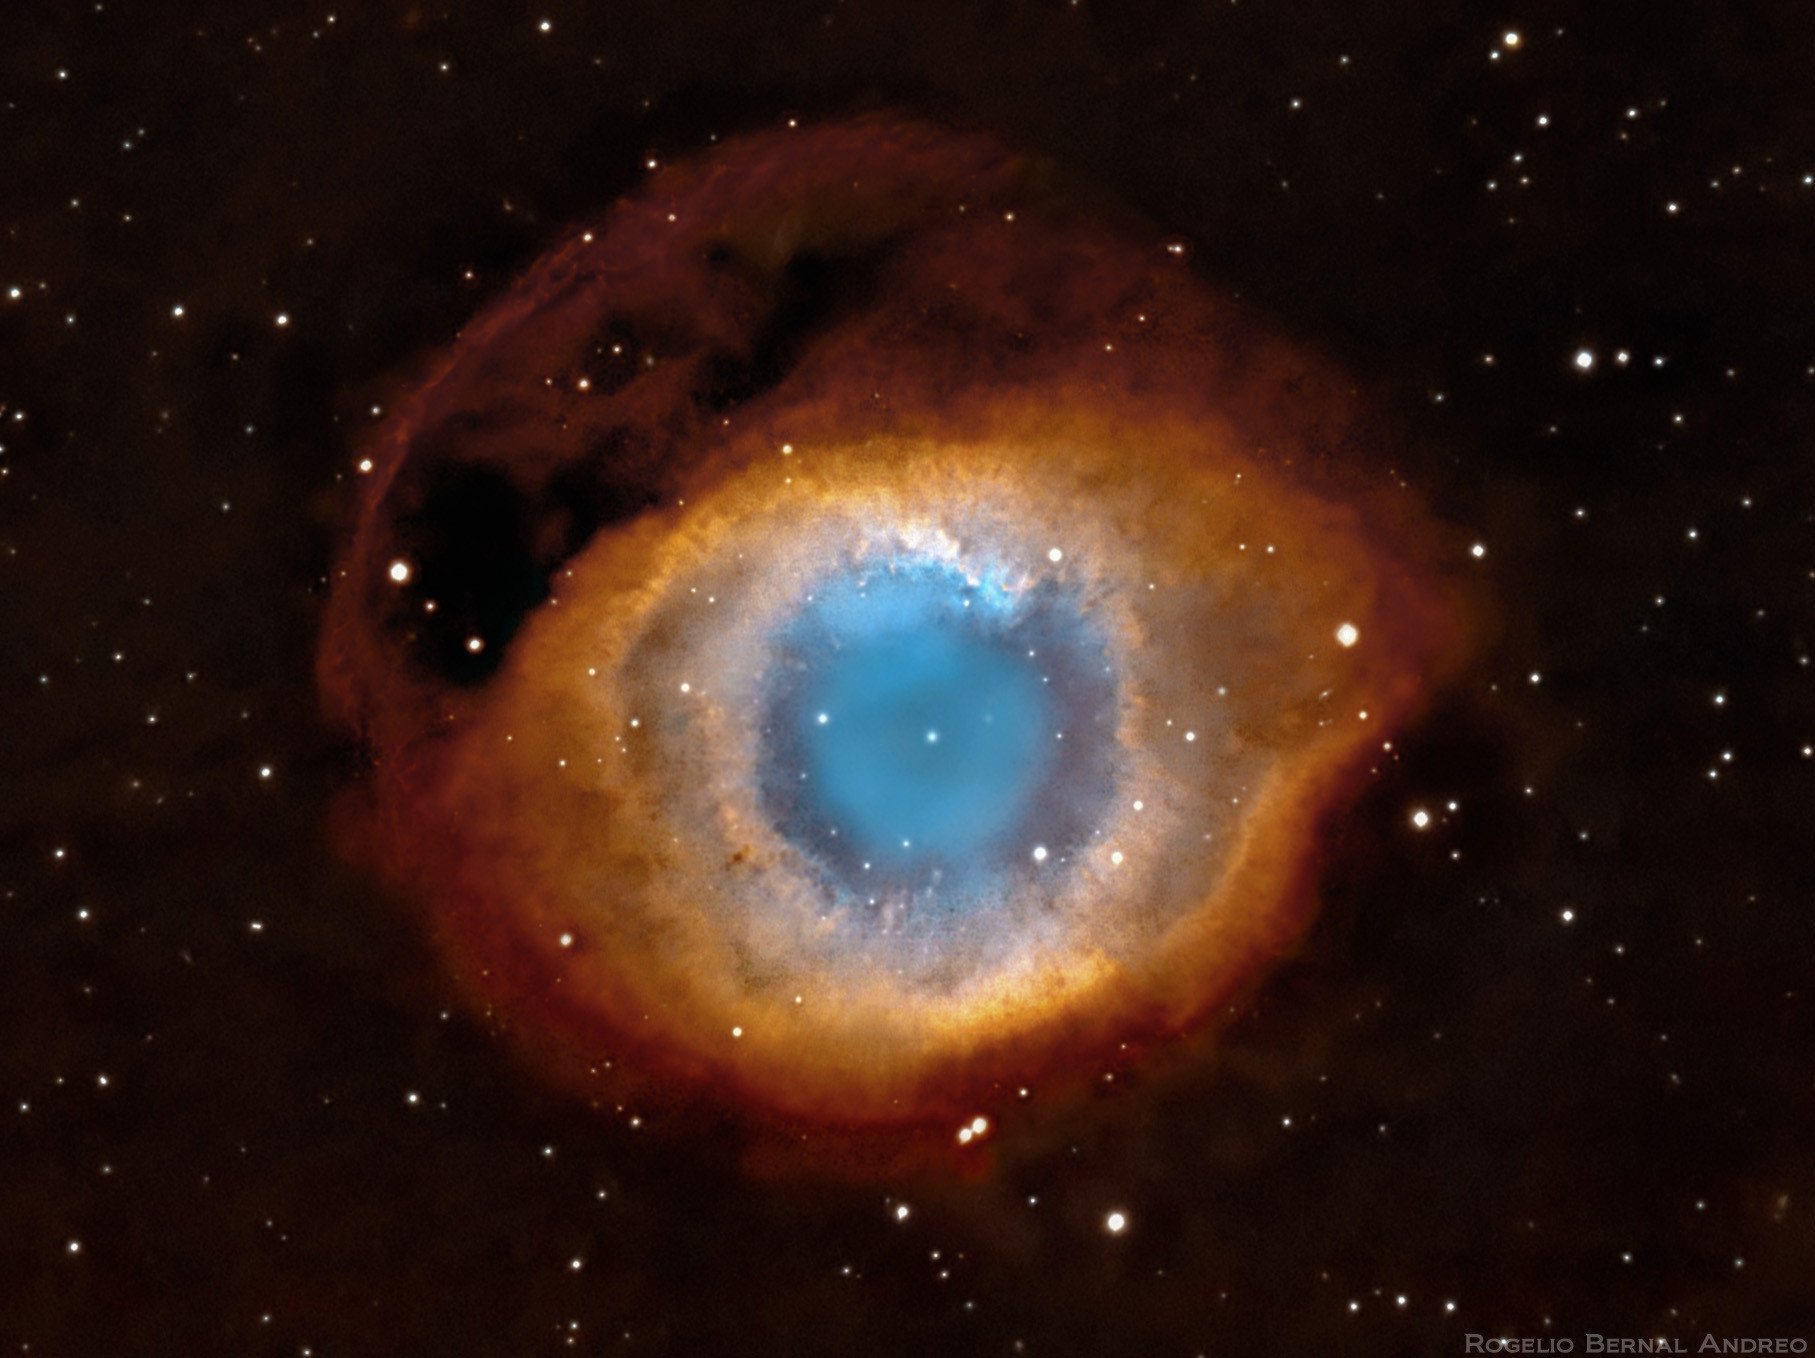 43+] Eye of God Nebula Wallpaper - WallpaperSafari